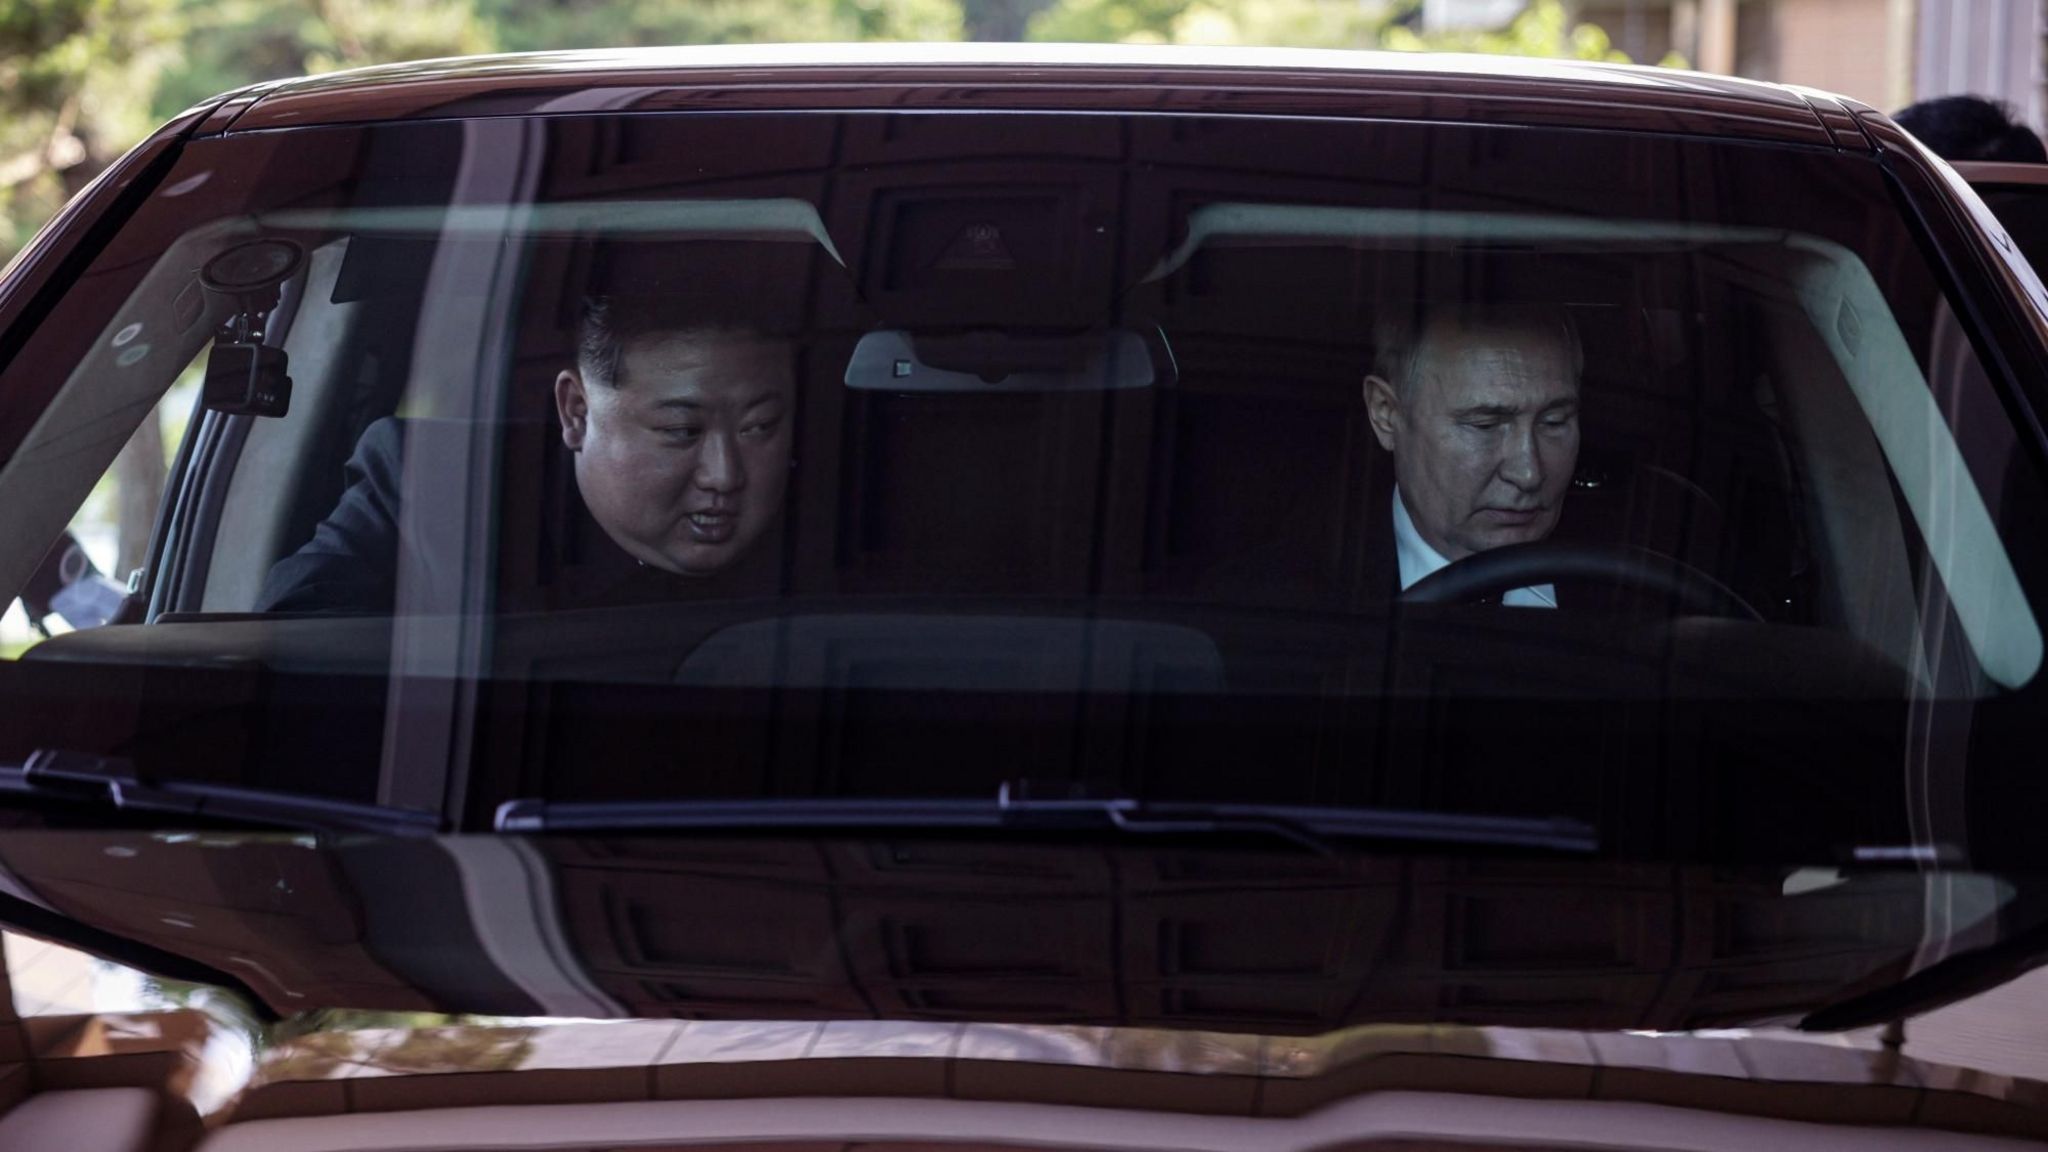 North Korean leader Kim Jong Un (left) and Russian President Vladimir Putin ride an Aurus car in Pyongyang